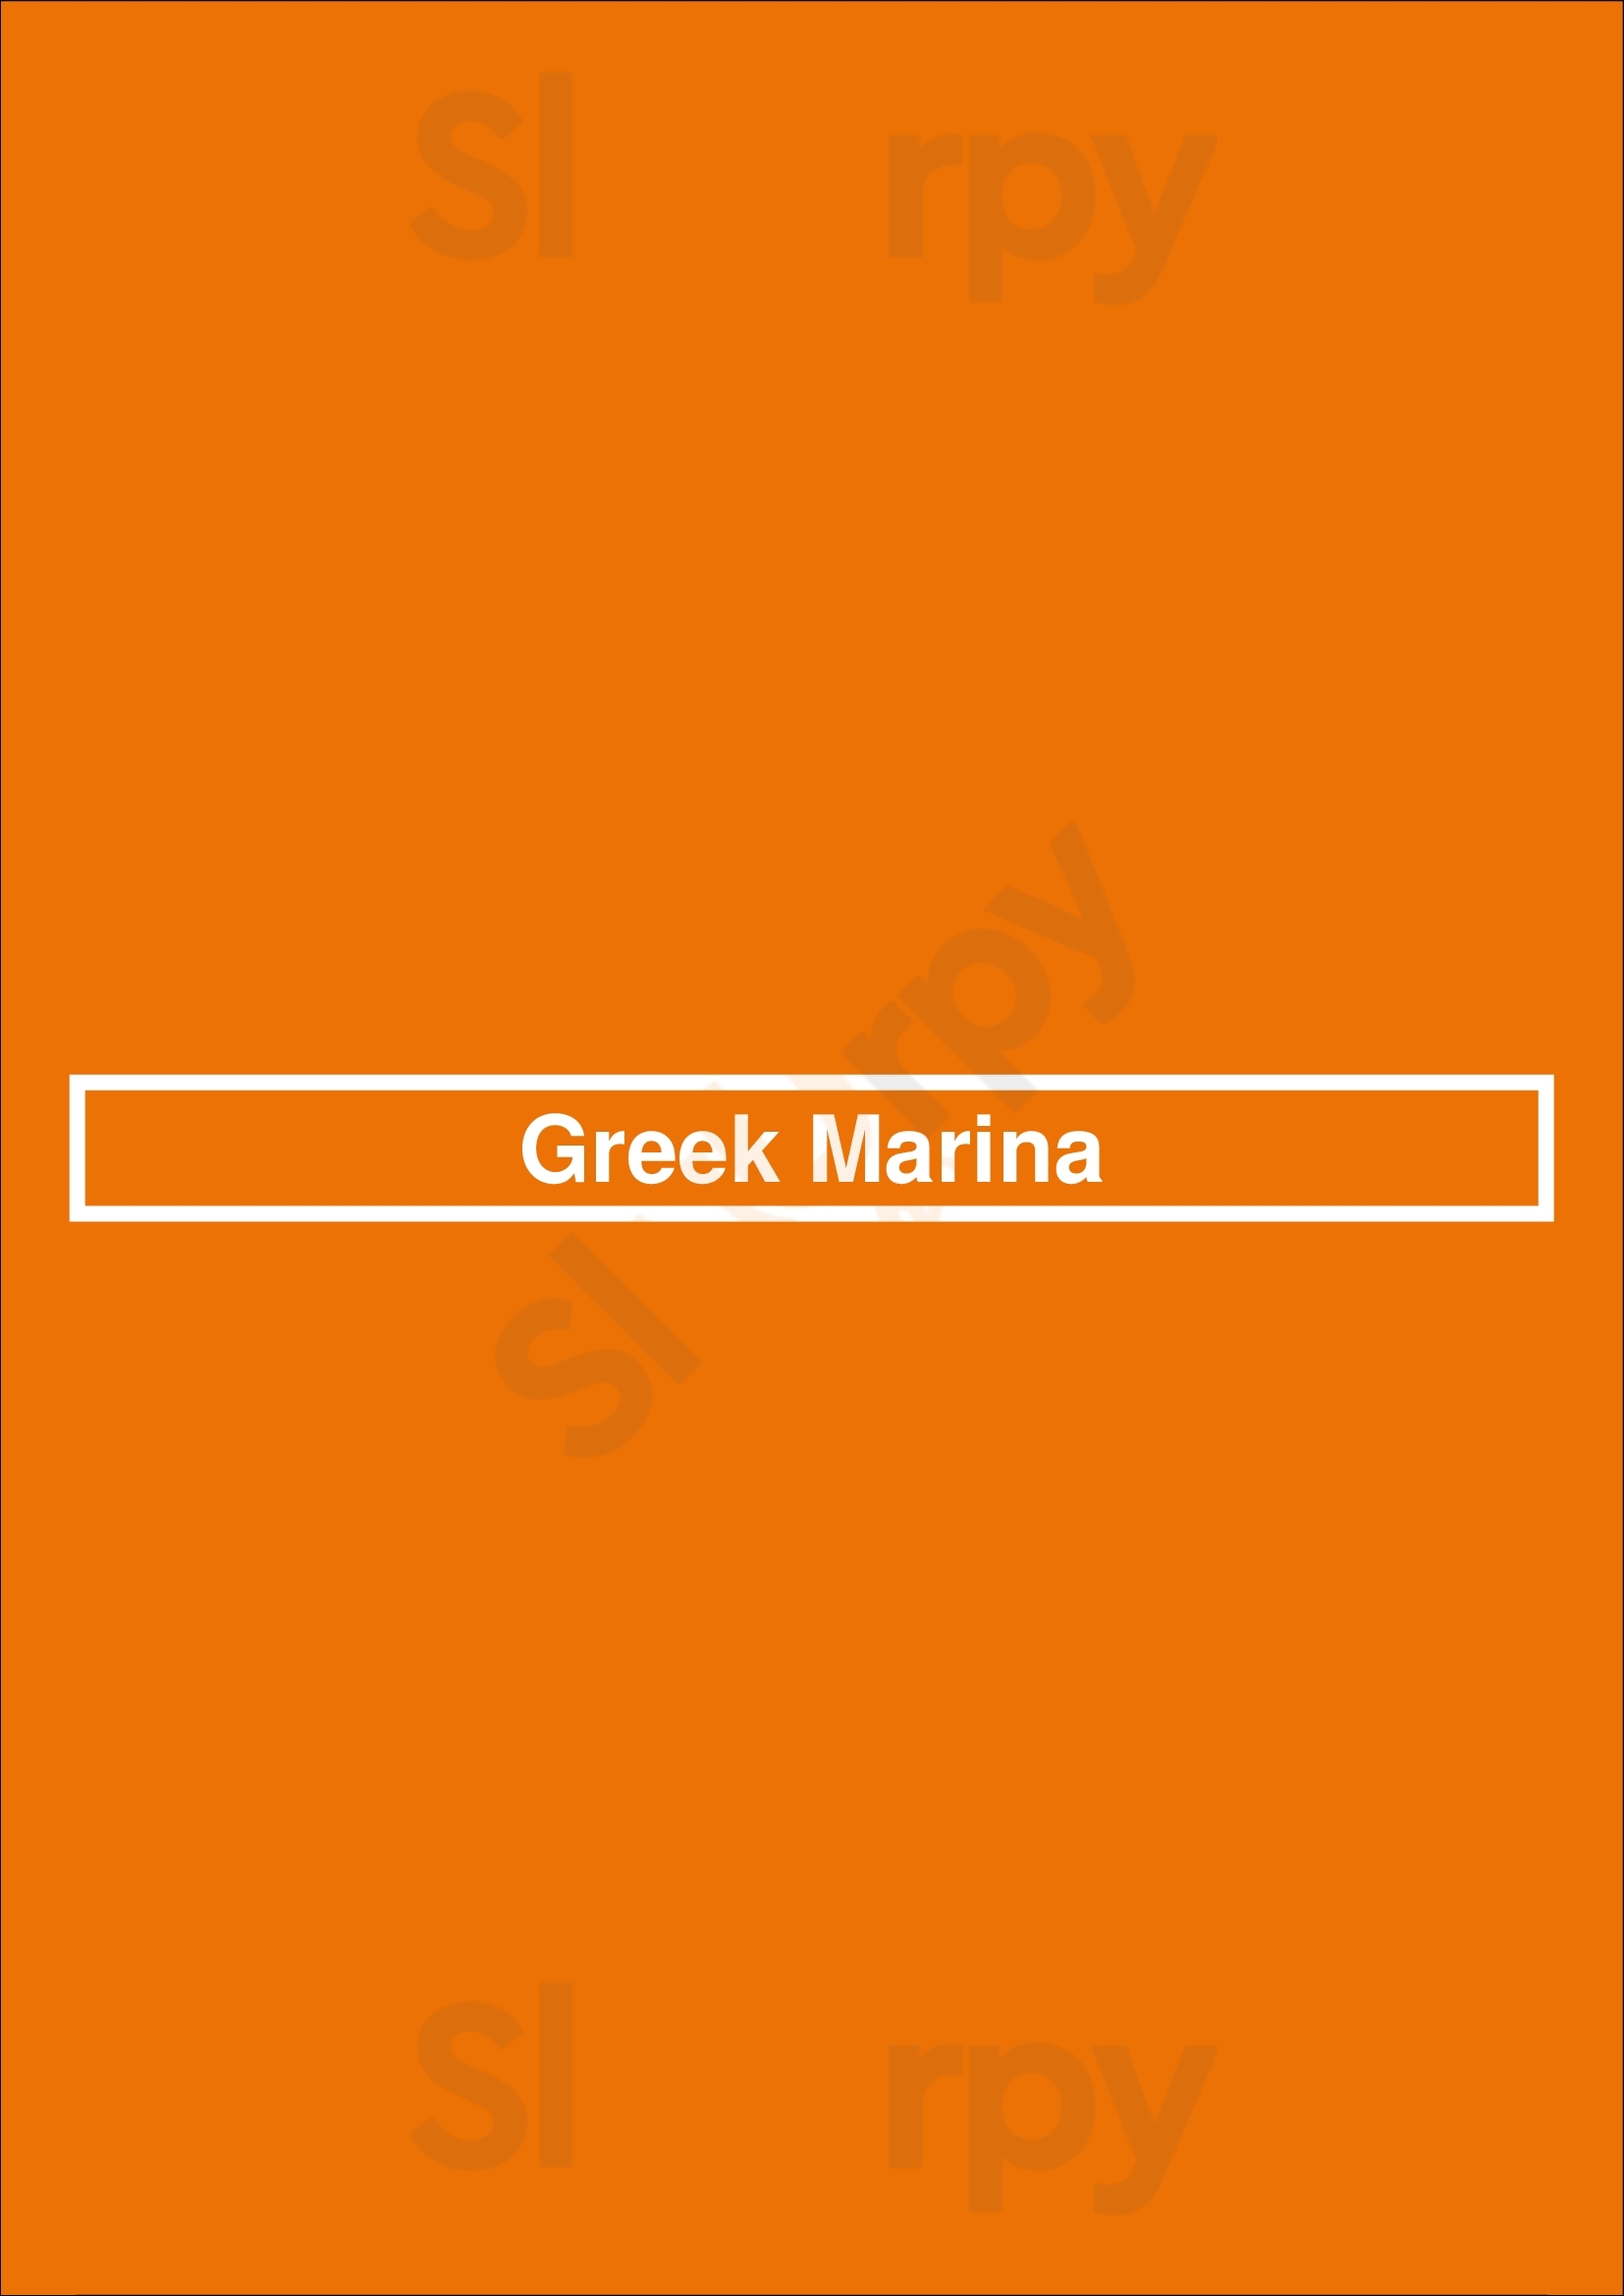 Greek Marina Honolulu Menu - 1